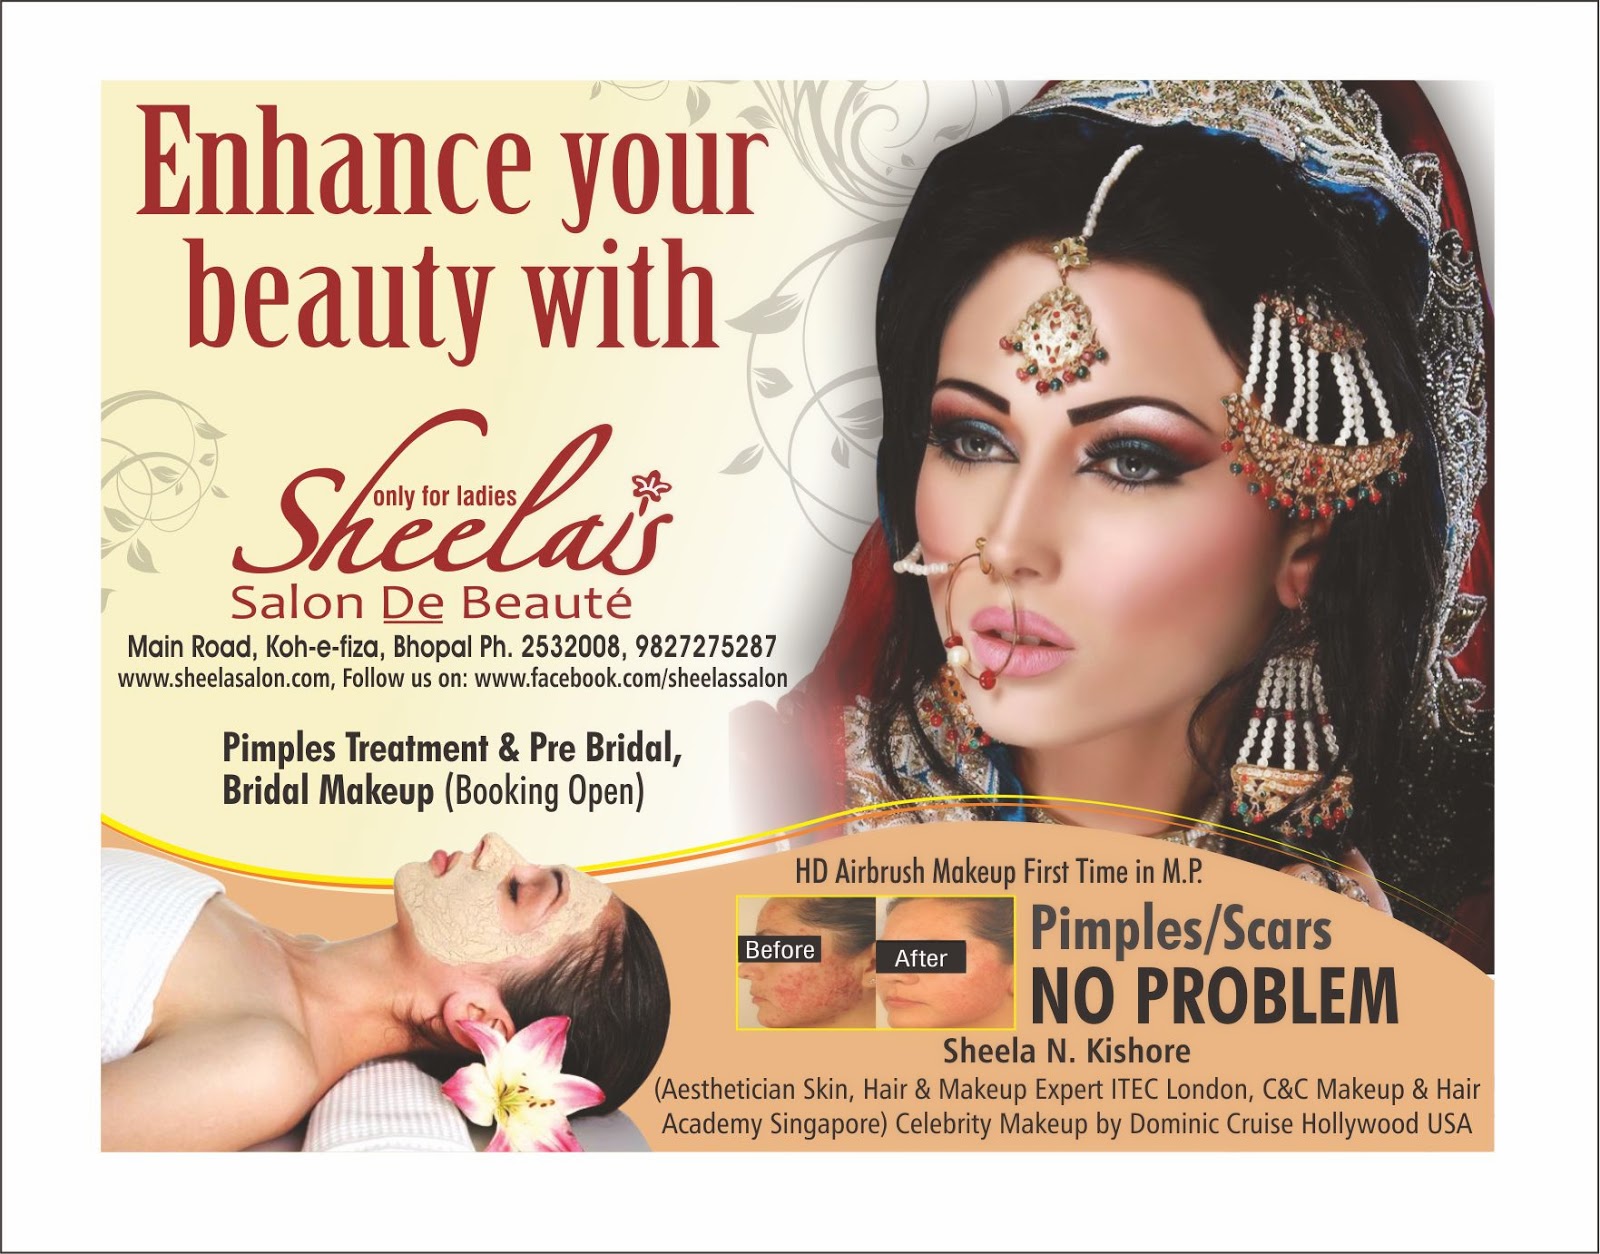 sheela's salon de beaute